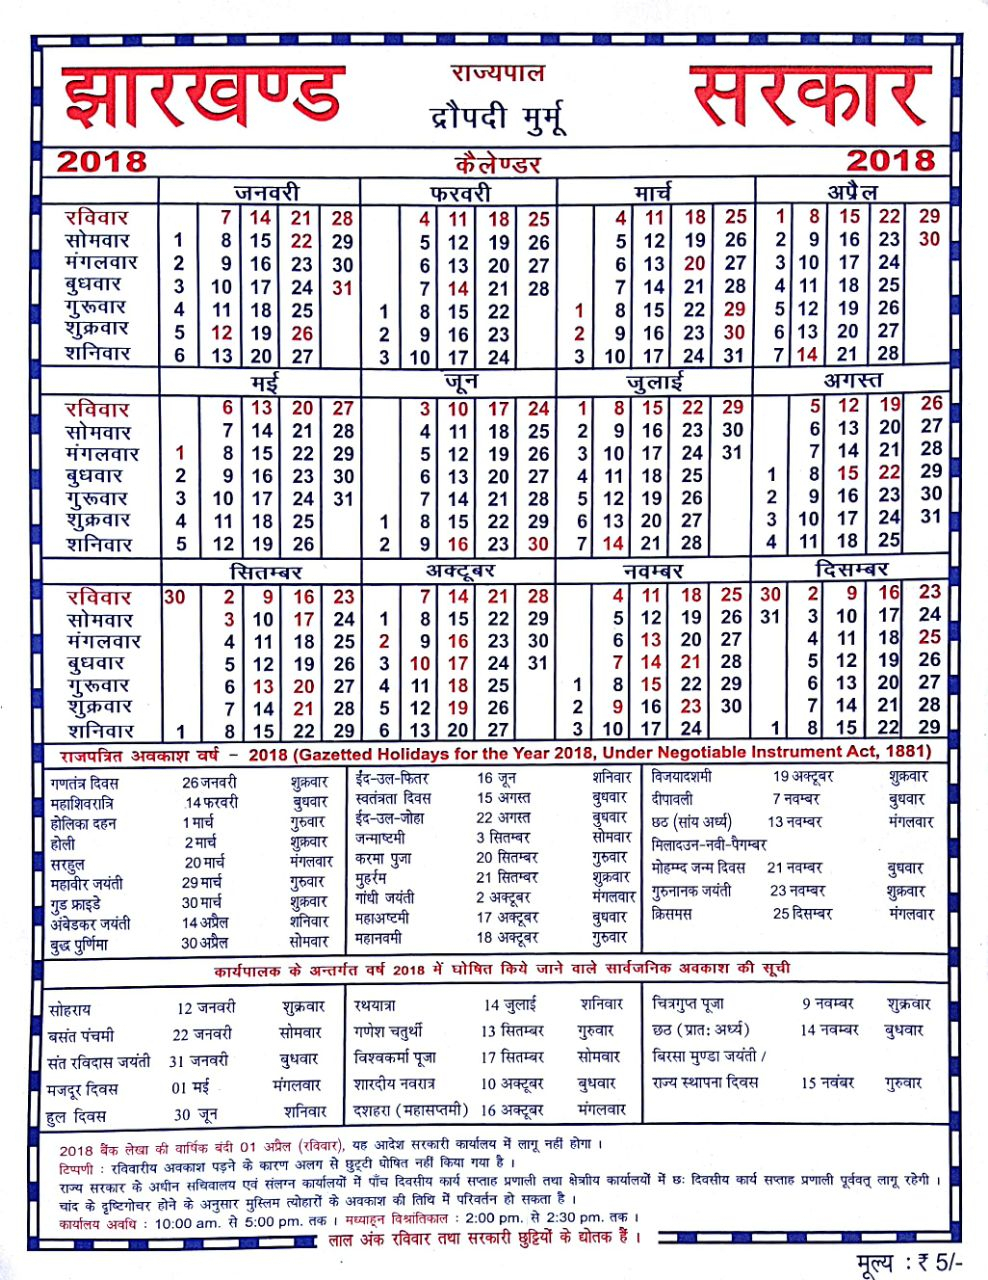 Latehar, Government Of Jharkhand | A Website Of Latehar with regard to Bihar Sarkar Calendar 2017